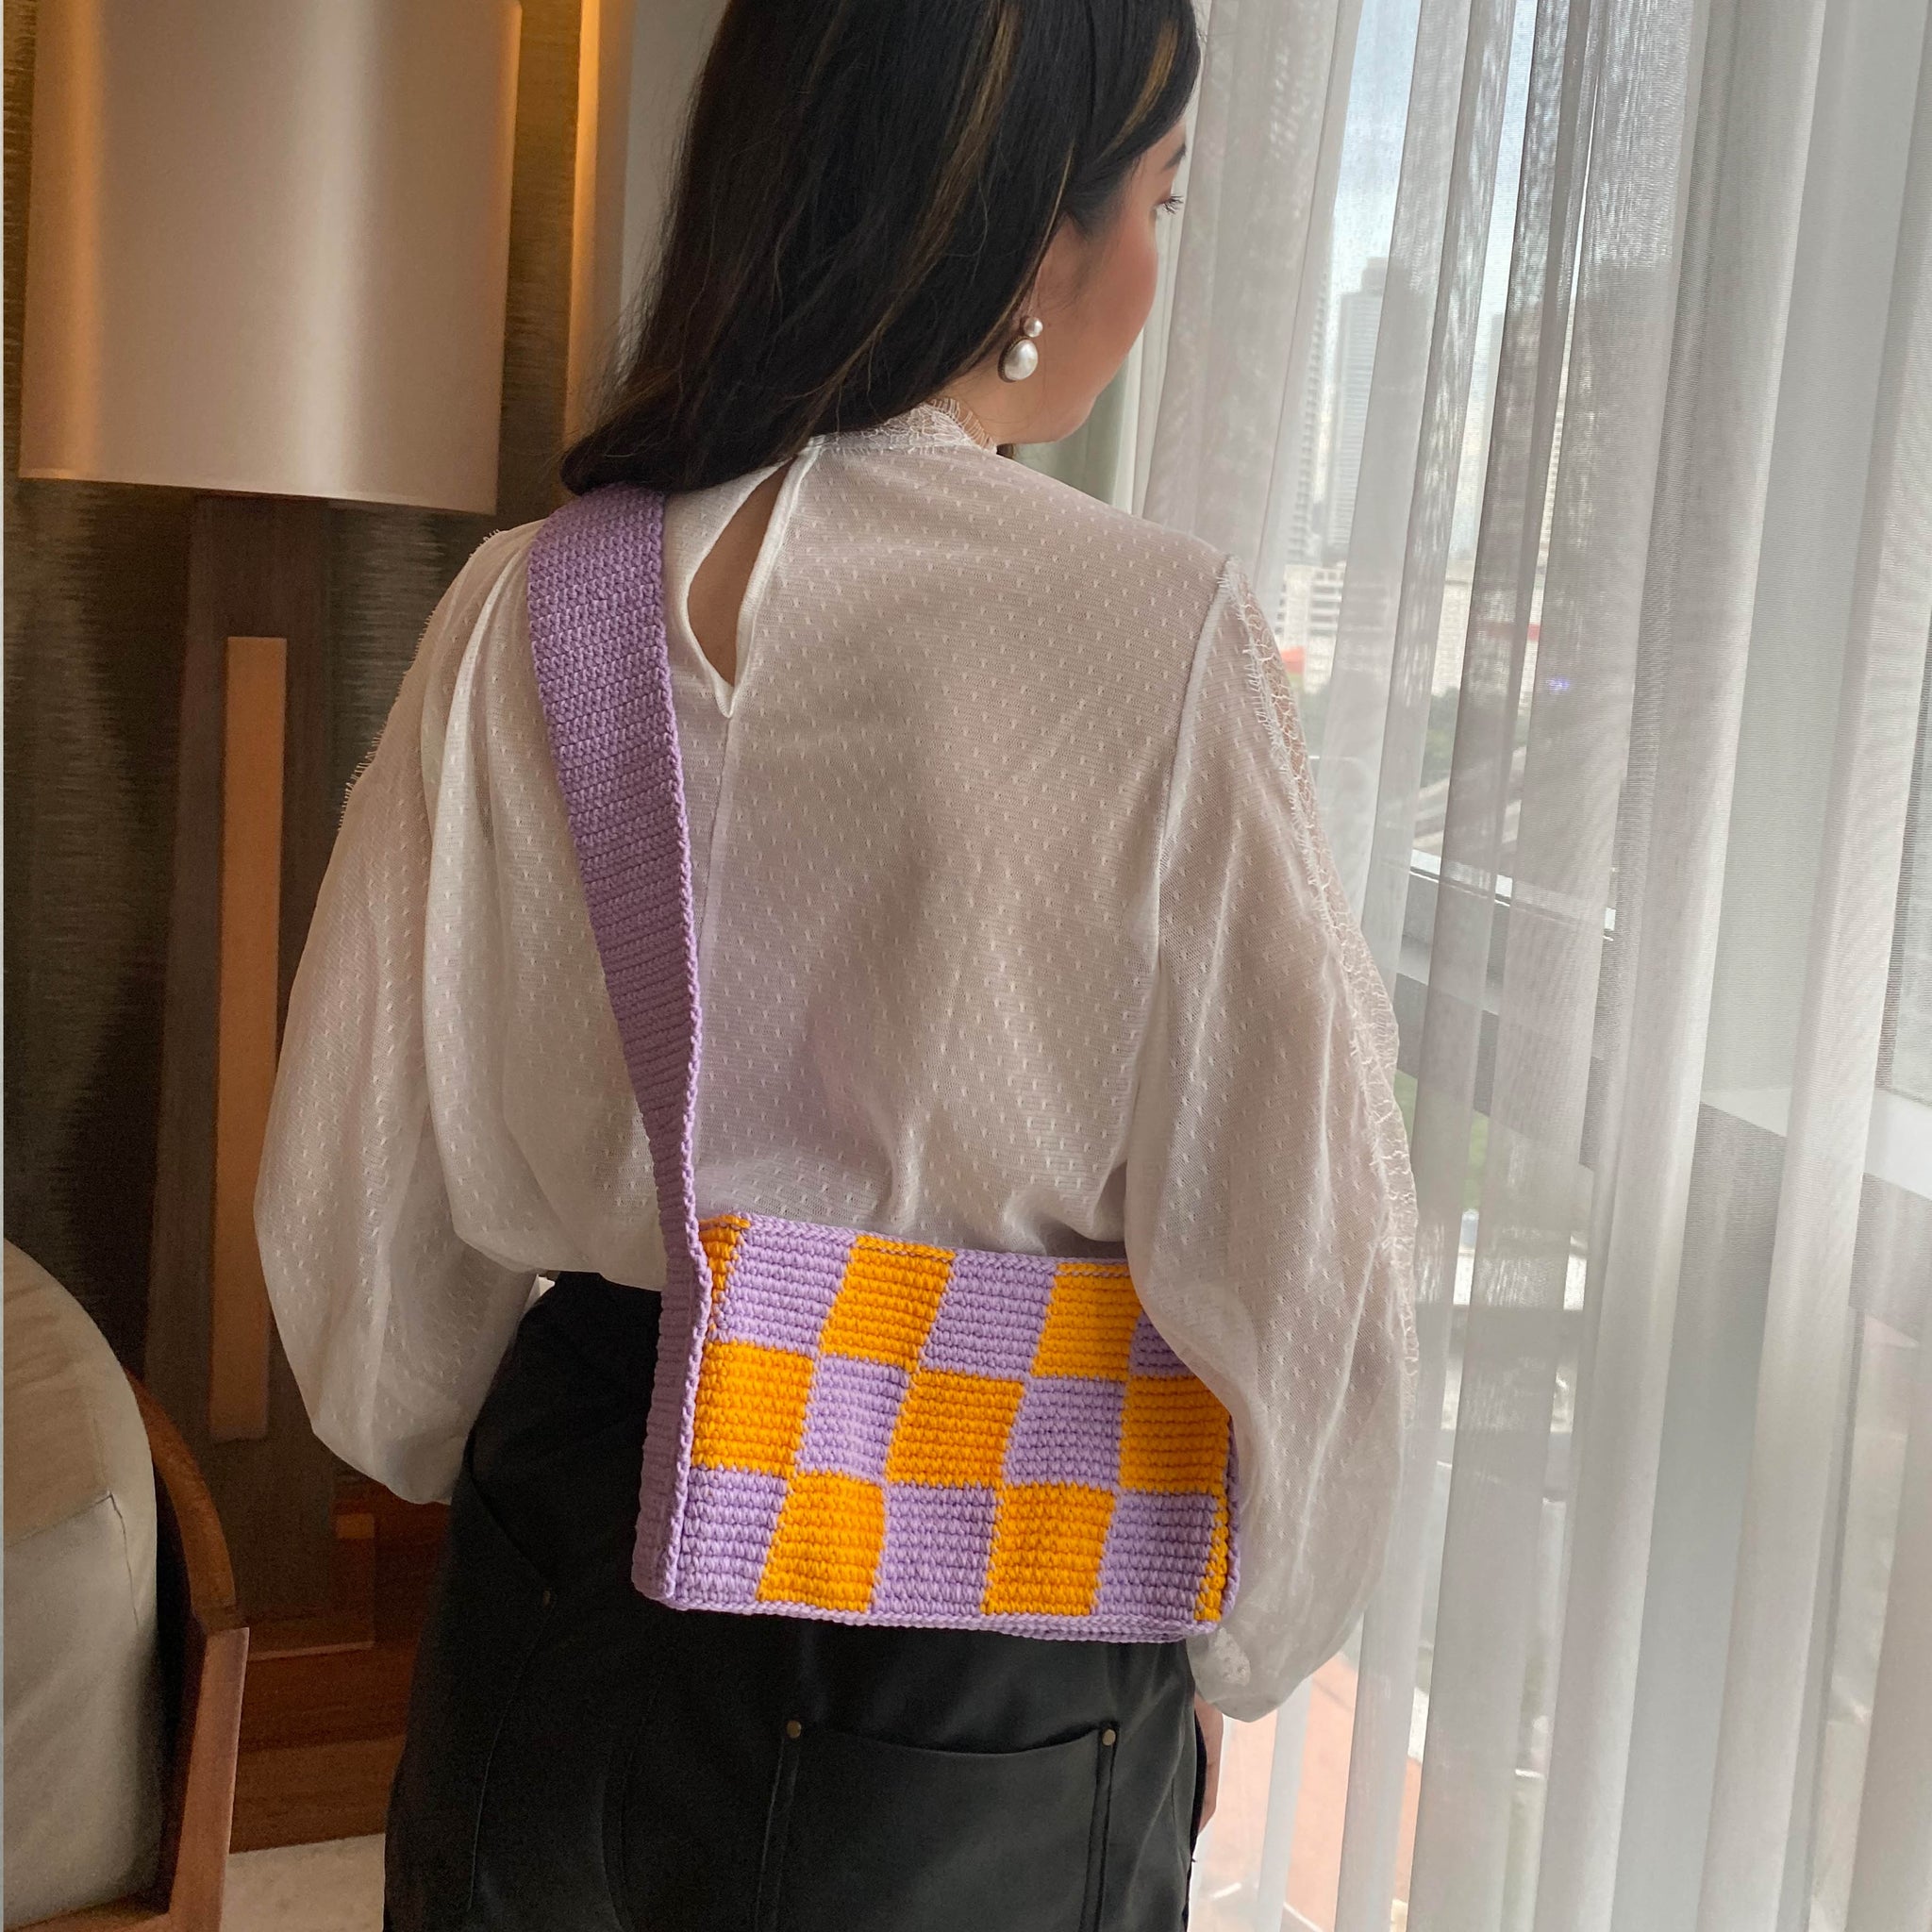 Checkered Mini Brick Bag in Lilac and egg yolk